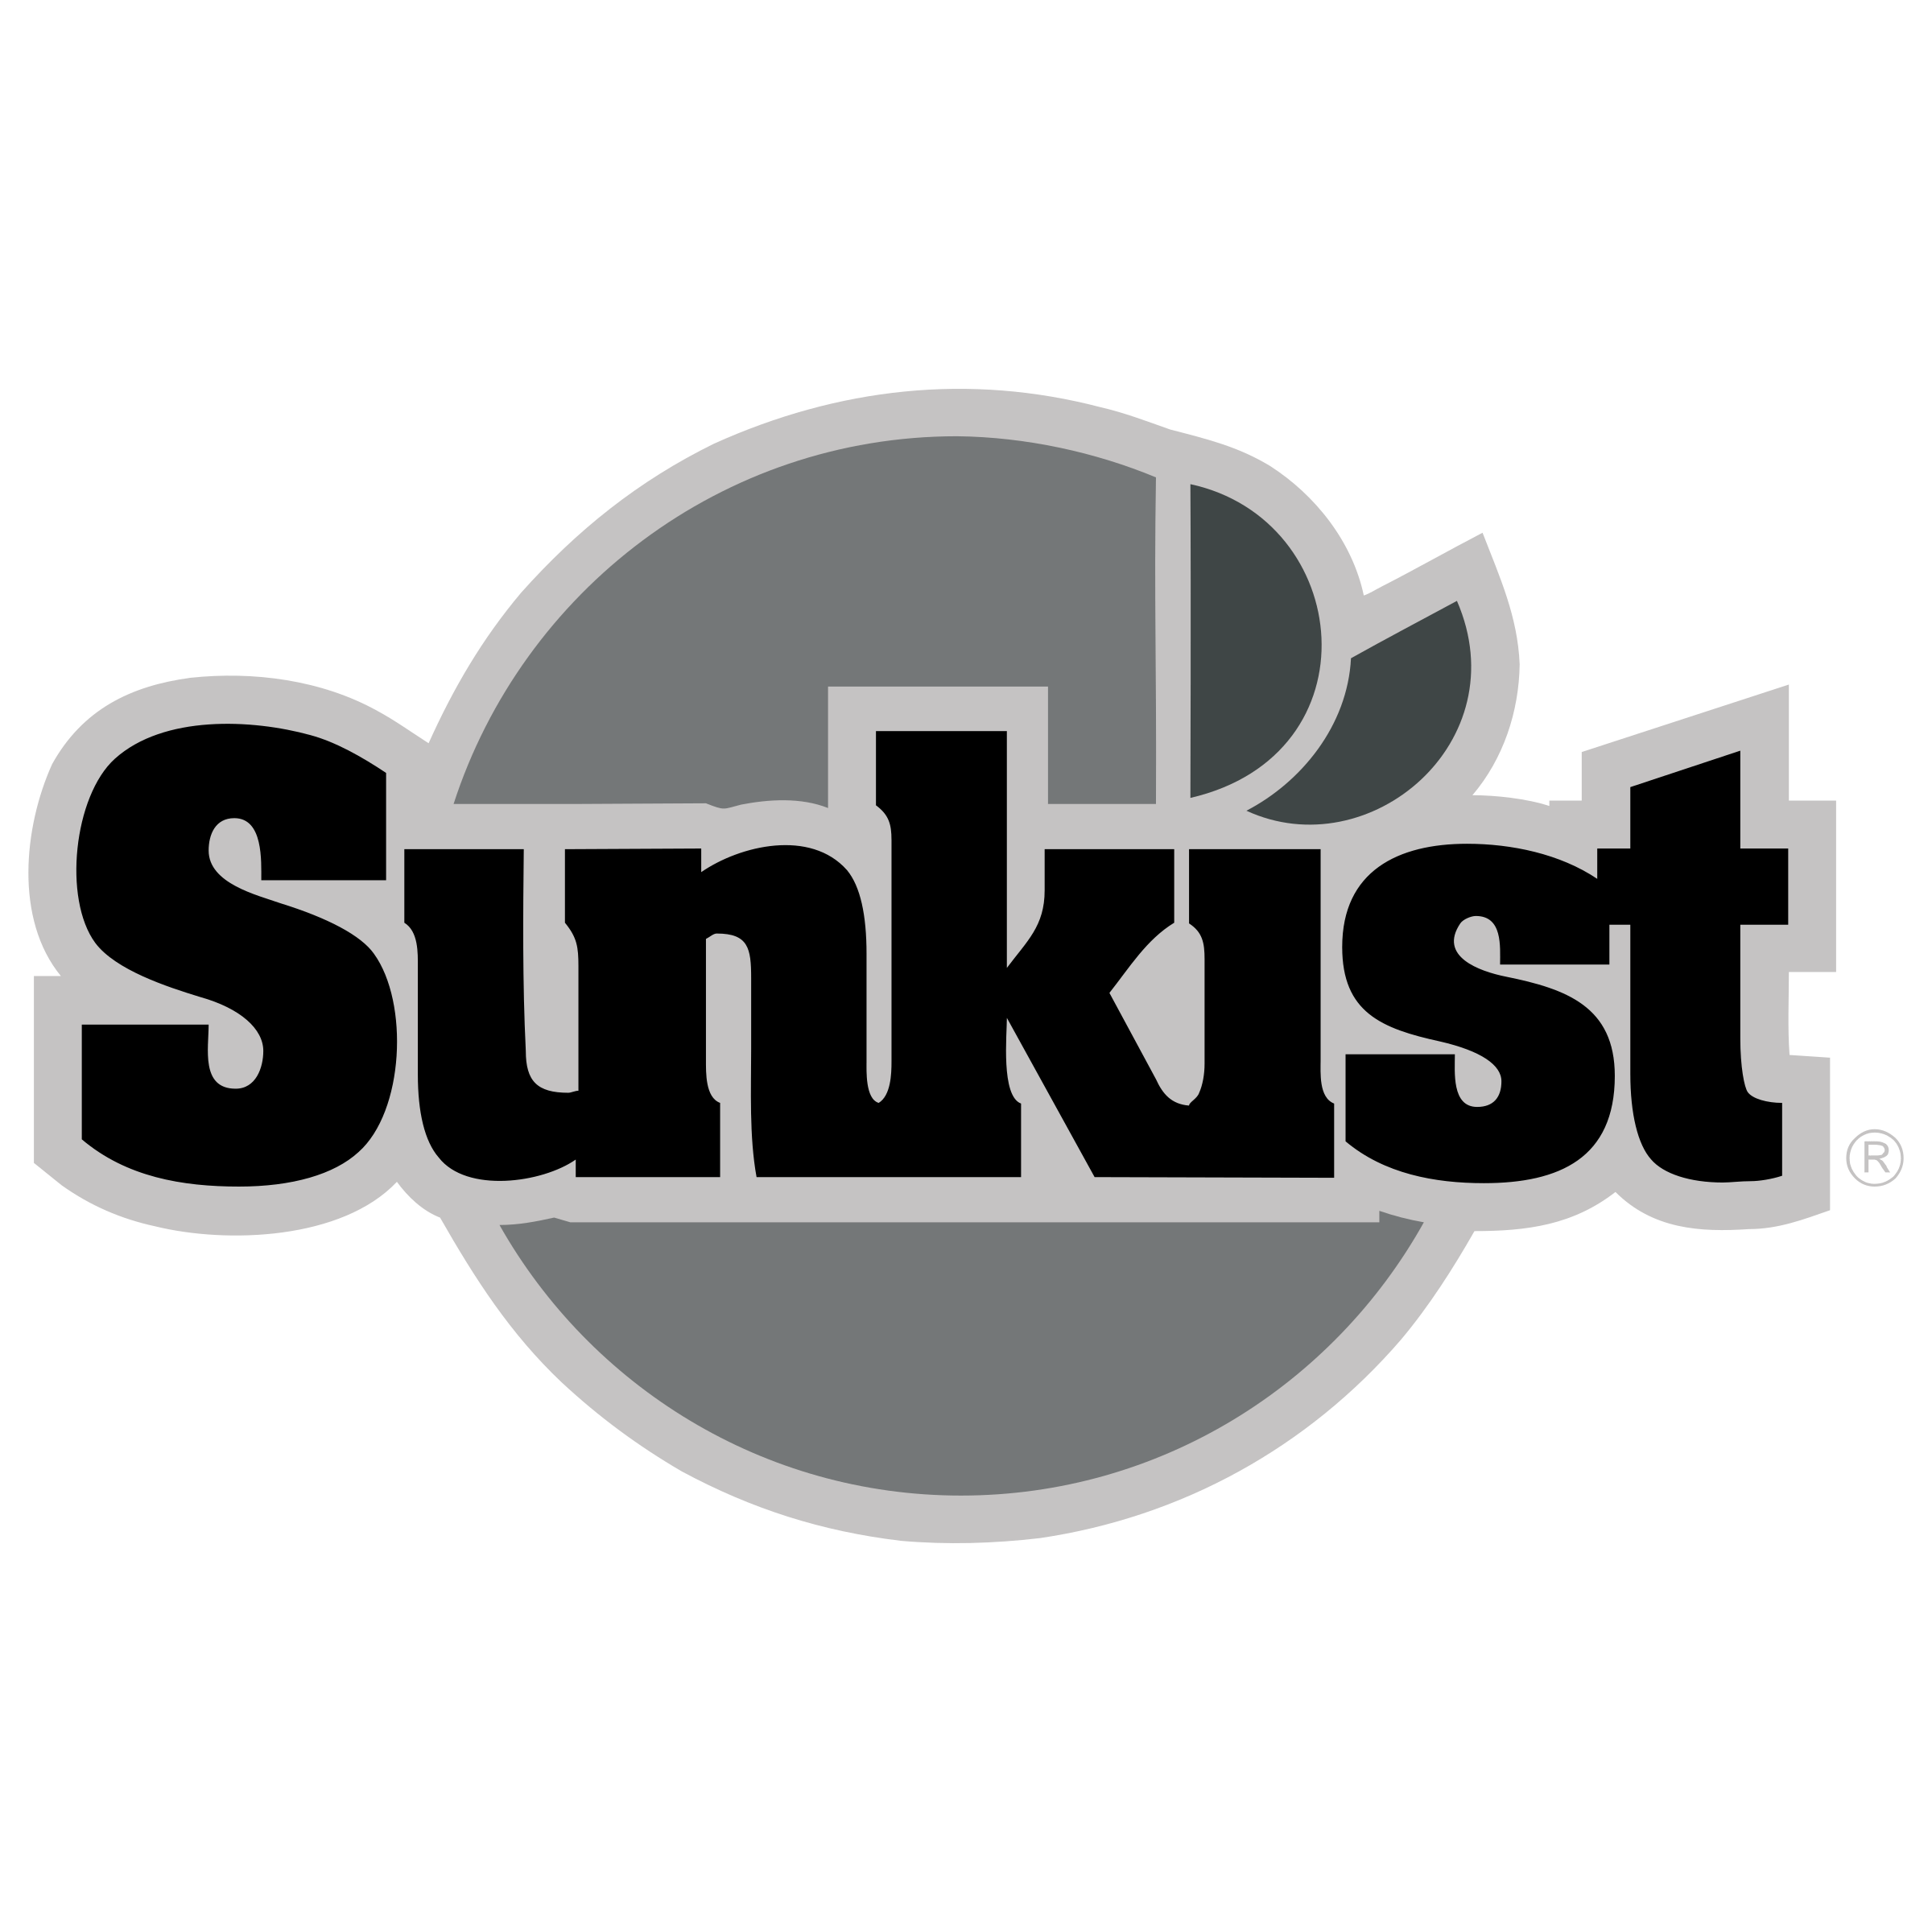 Sunkist Logo - Sunkist Logo PNG Transparent & SVG Vector - Freebie Supply